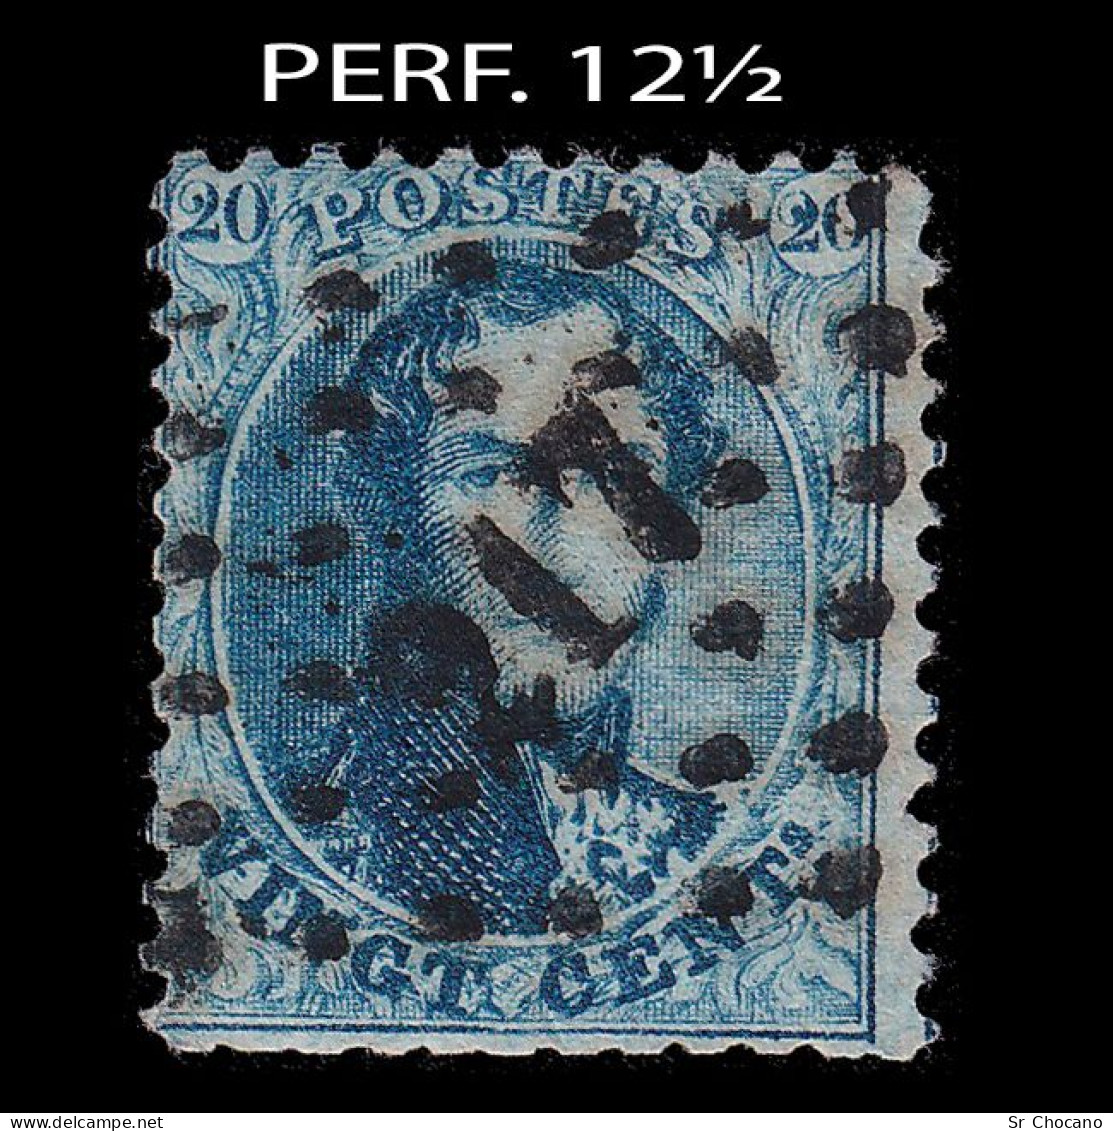 BELGIUM.1863.K.Leopold I.20c.YVERT 15A.CANCEL 217.PERF. 12½ - 1863-1864 Medallions (13/16)